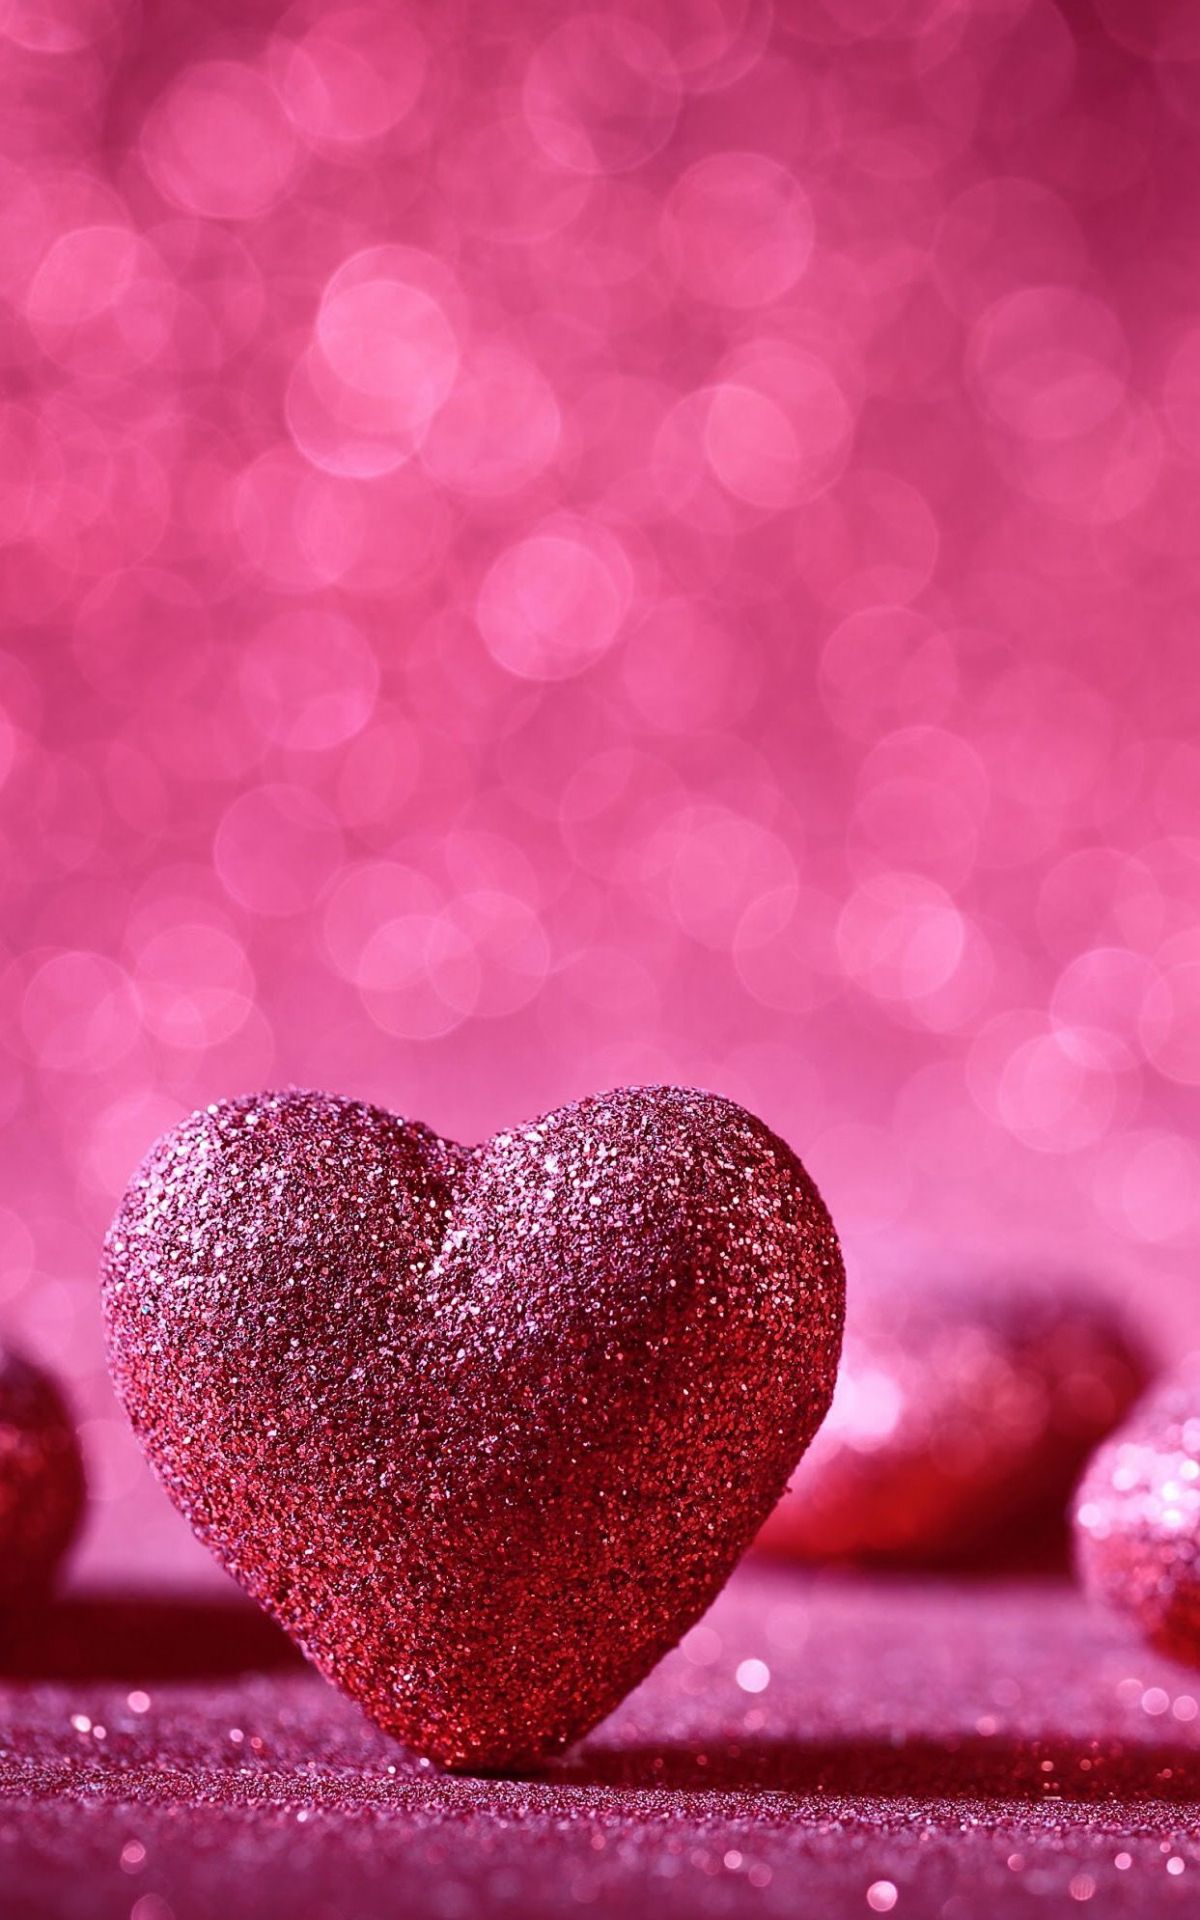 Free download 50 Glitter Heart Wallpaper Download [1243x2208] for your Desktop, Mobile & Tablet. Explore Heart Picture Wallpaper. Broken Heart Wallpaper, Kingdom Hearts Wallpaper, Pink Heart Wallpaper